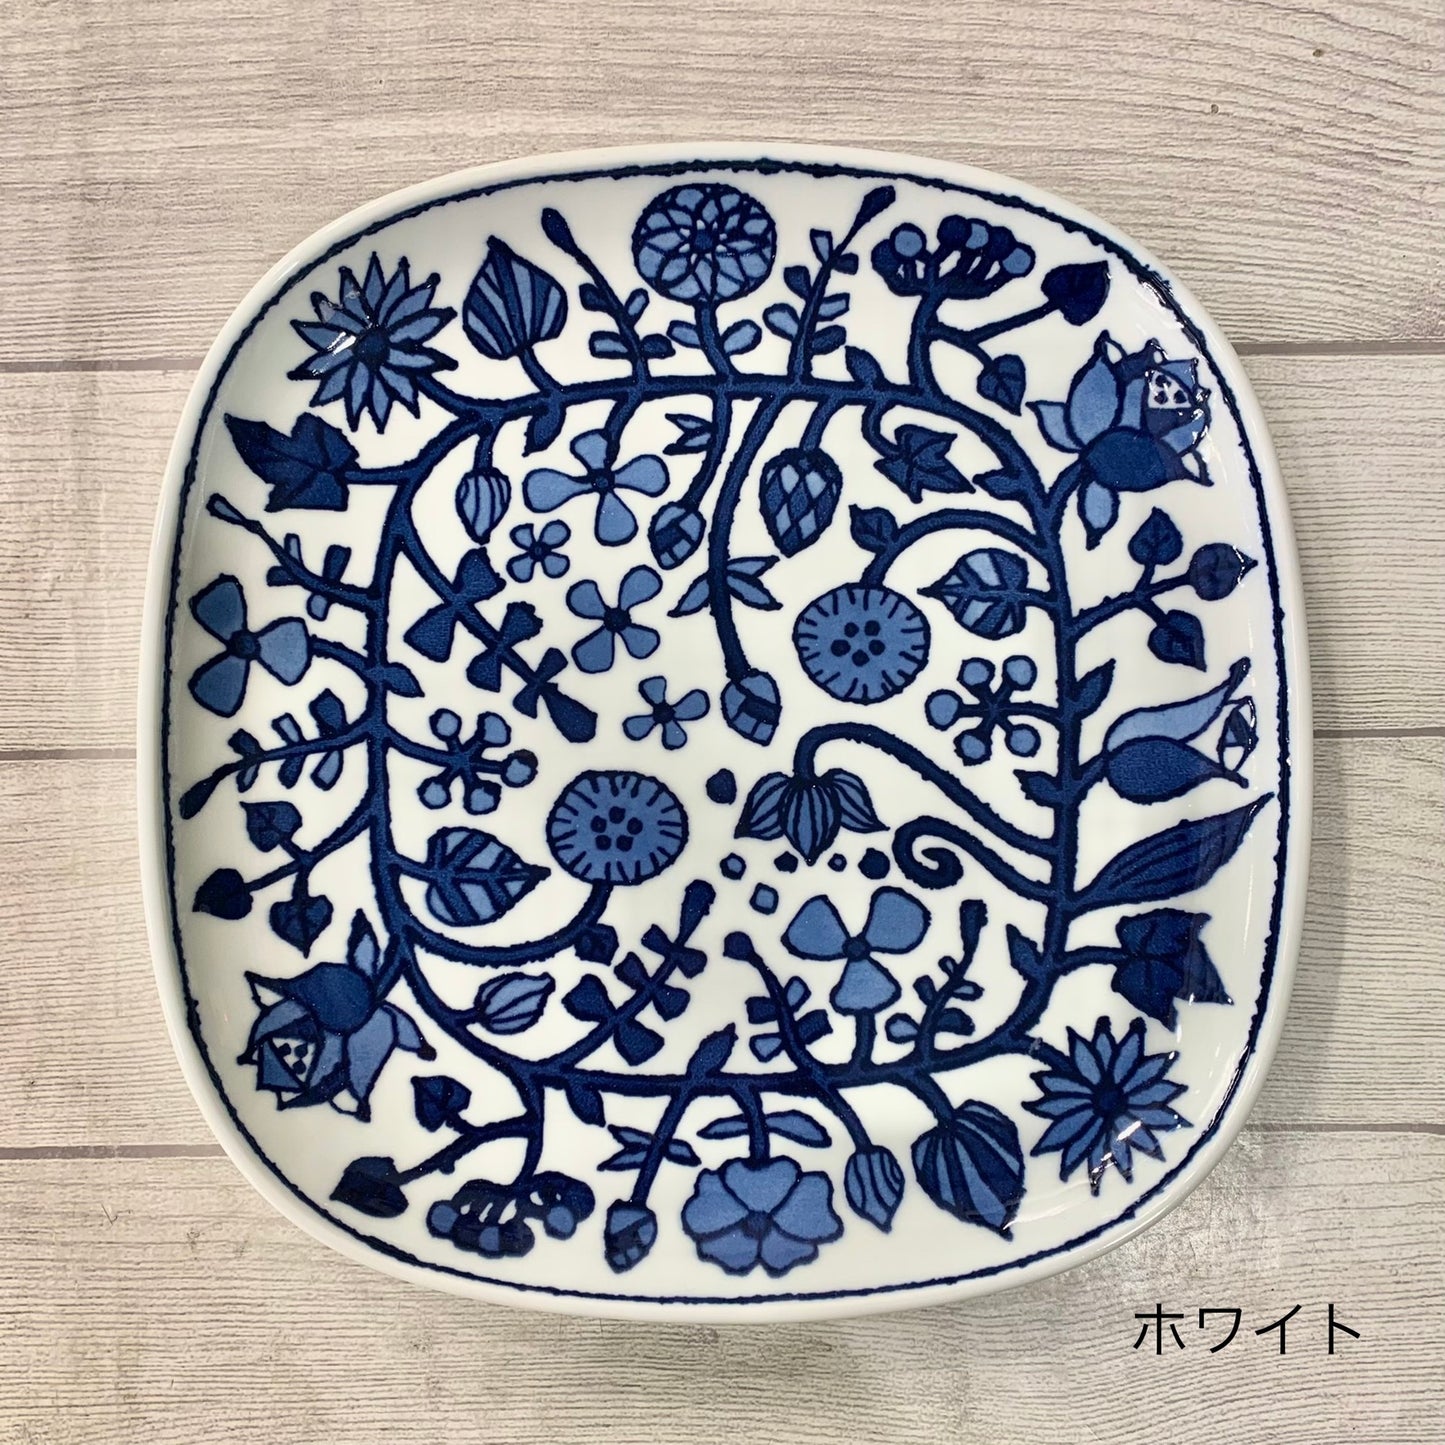 [Hasami ware] [Wayama] [Flower parade] [Large plate] Plate retro cute